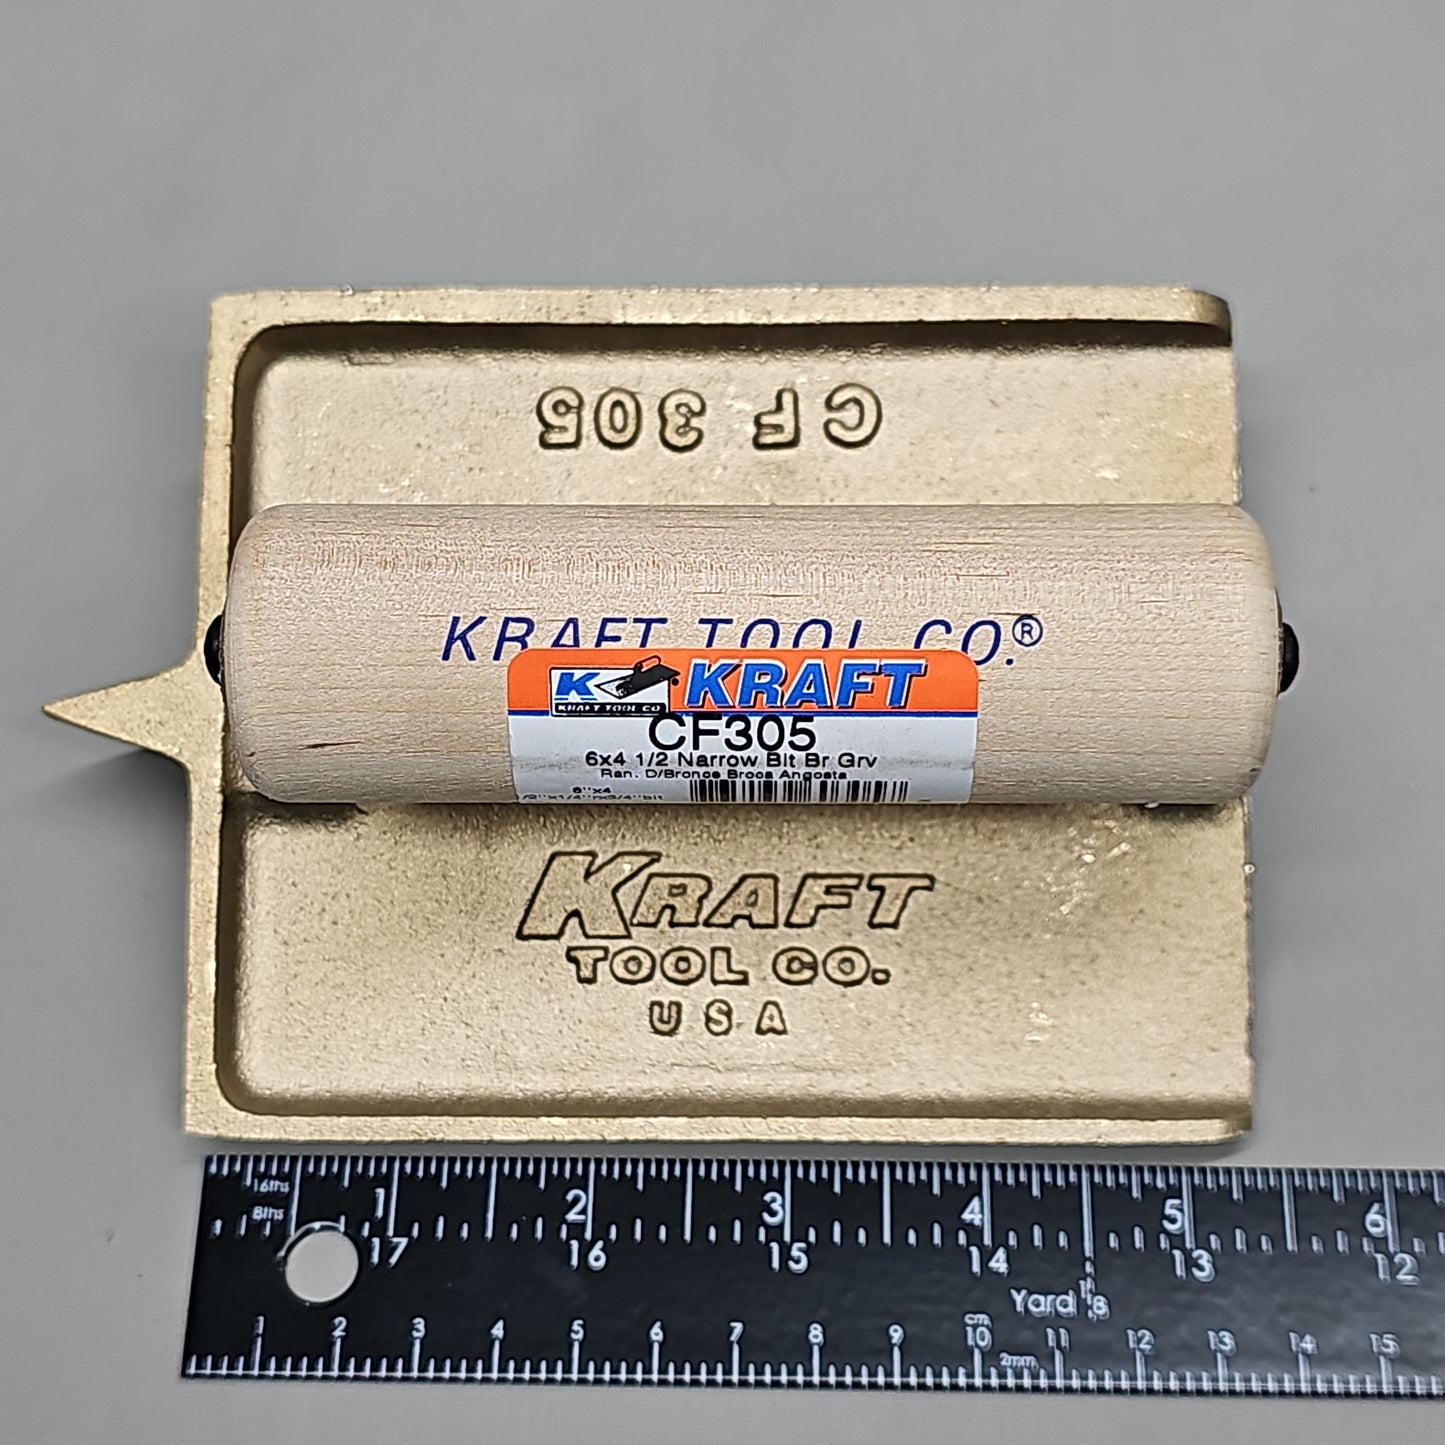 KRAFT TOOL CO Narrow Bit Bronze Groover with Wood Handle 6" x 4-1/2" 1/4"R, 3/4"D CF305 (New)